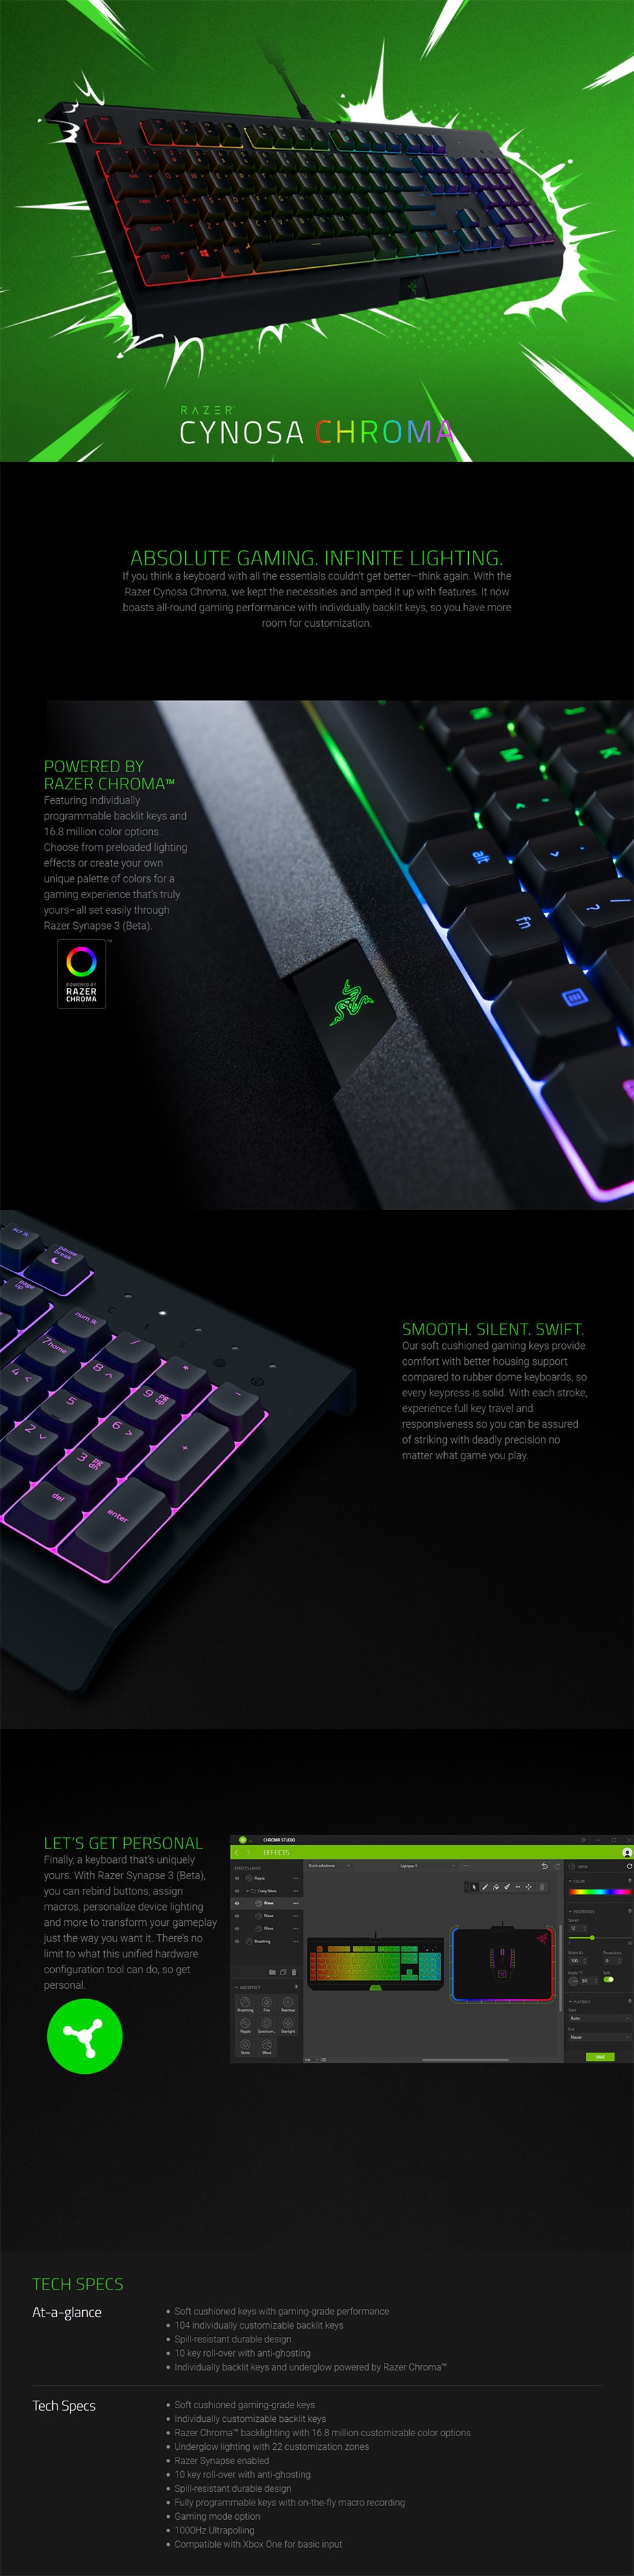 Razer Cynosa Chroma Gaming Keyboard - Overview 1